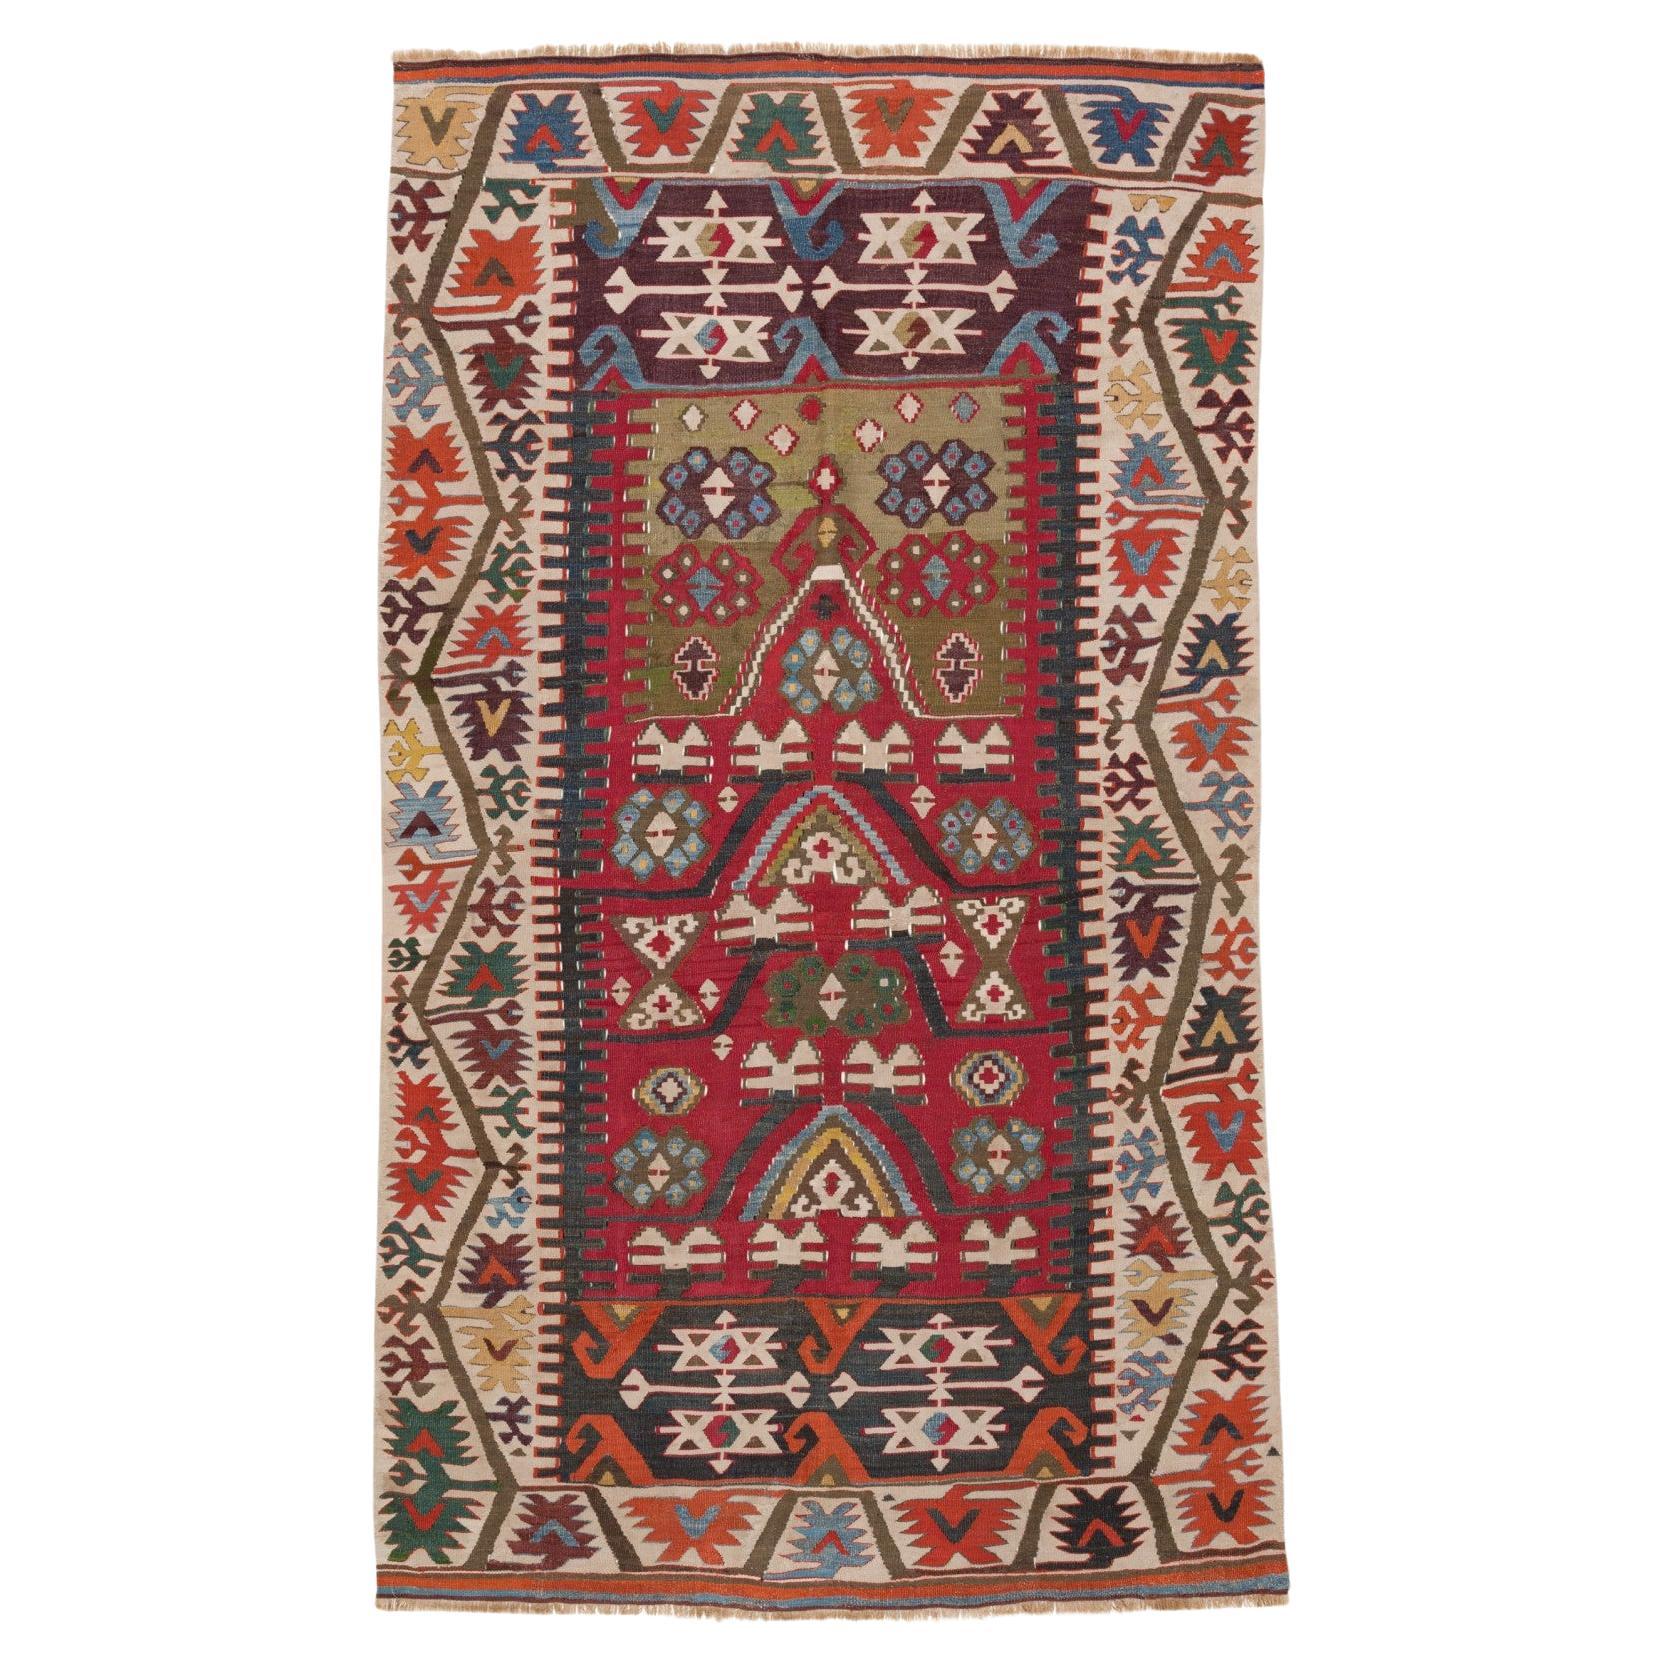 Antique Aksaray Kilim Rug Wool Old Central Anatolian Turkish Carpet For Sale